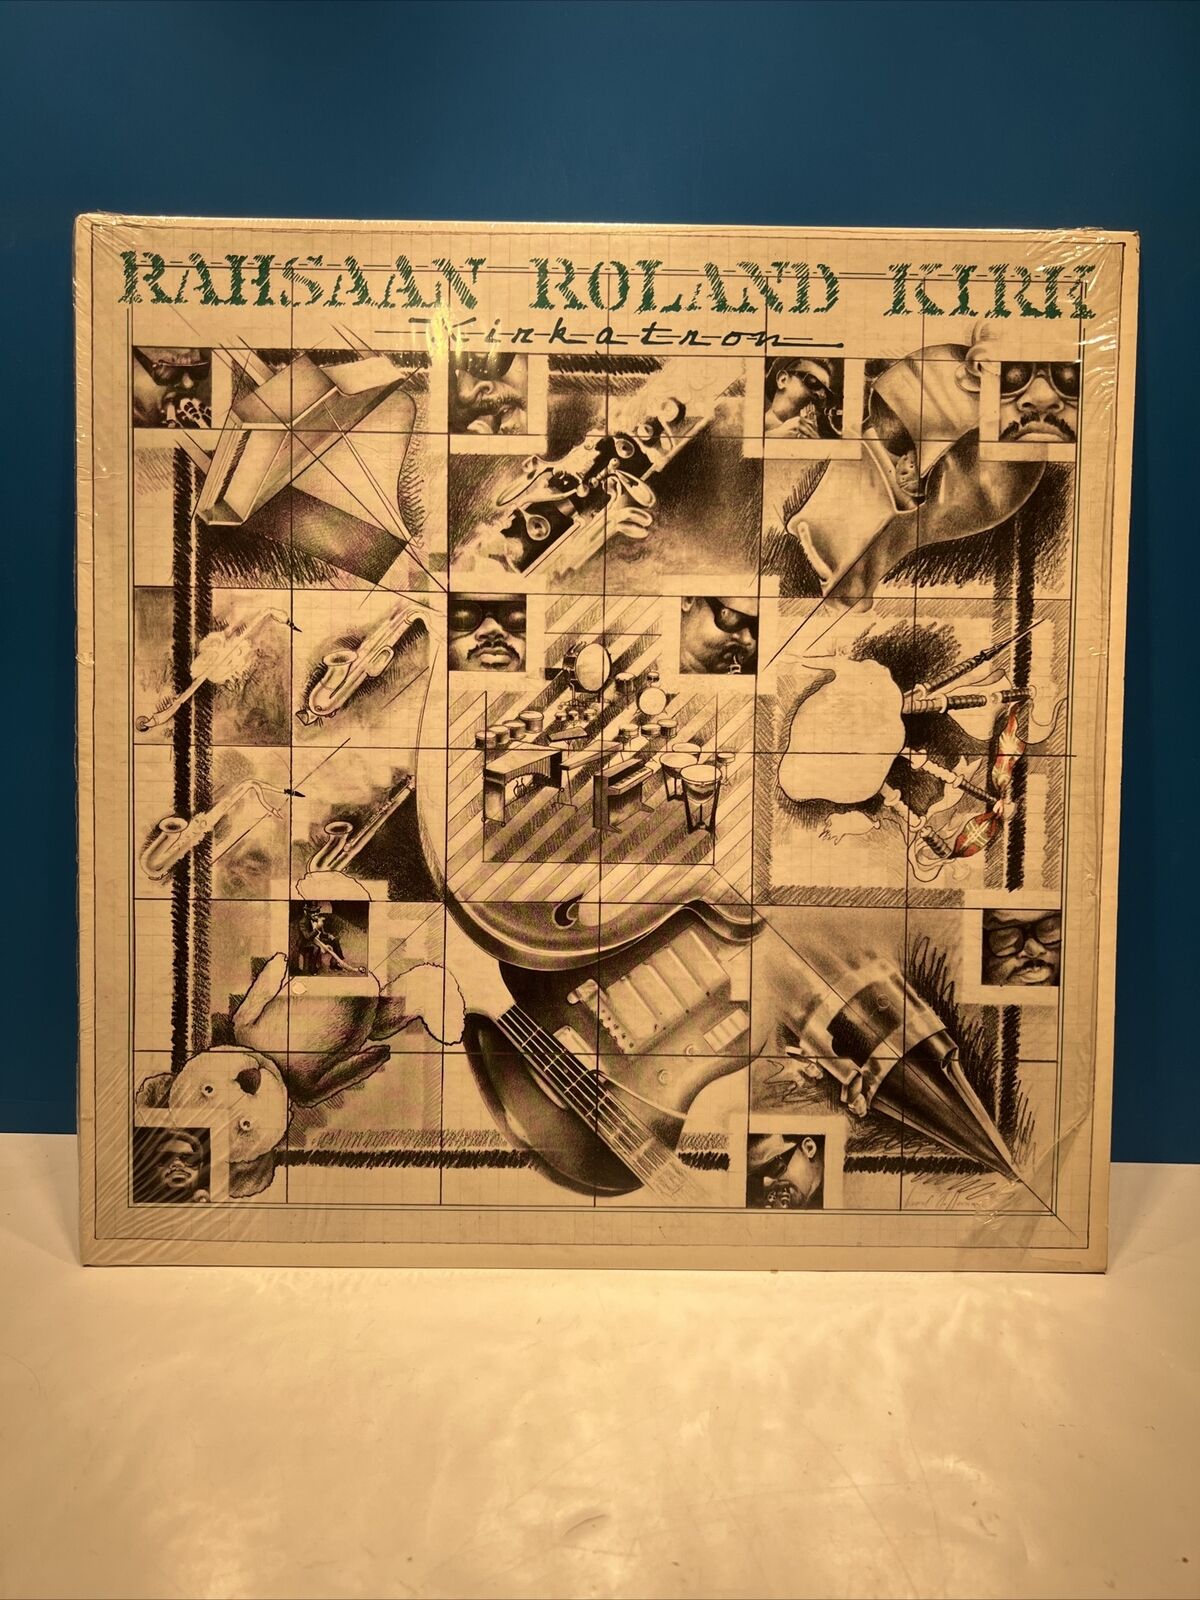 Rahsaan Roland Kirk/Kirkatron/1977 PROMO LP/Warner Bros BS 2982/PRISTINE MINT-